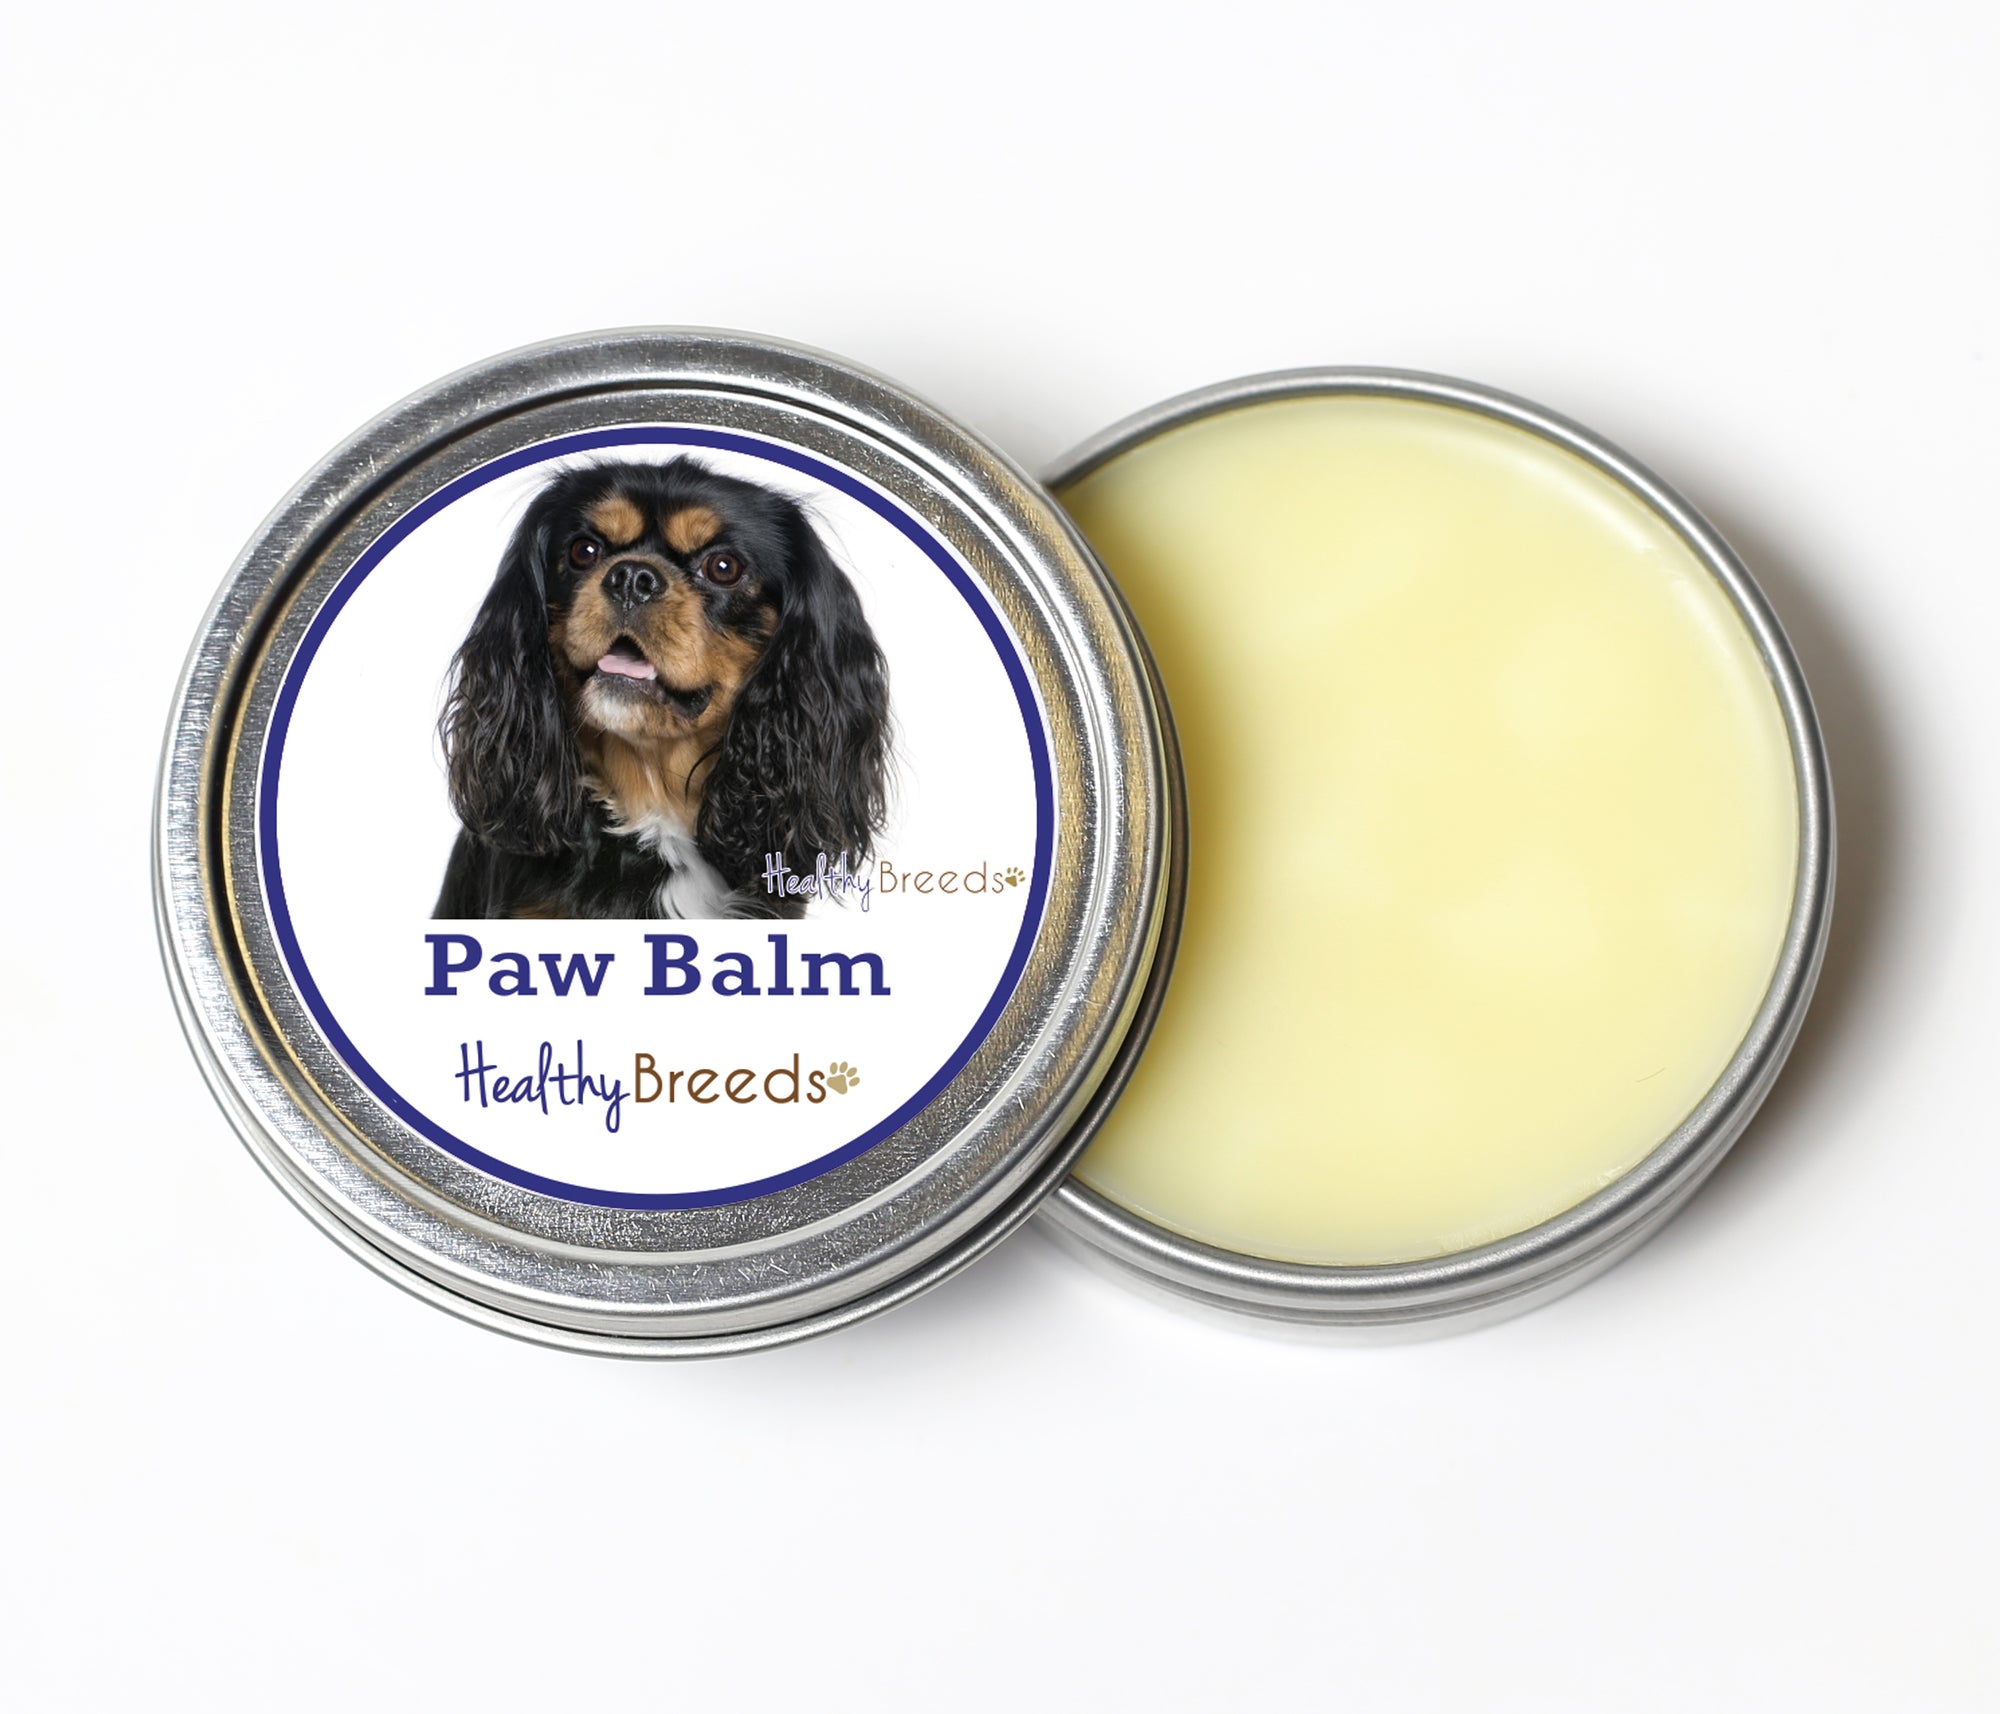 Healthy Breeds Cavalier King Charles Spaniel Dog Paw Balm 2 oz